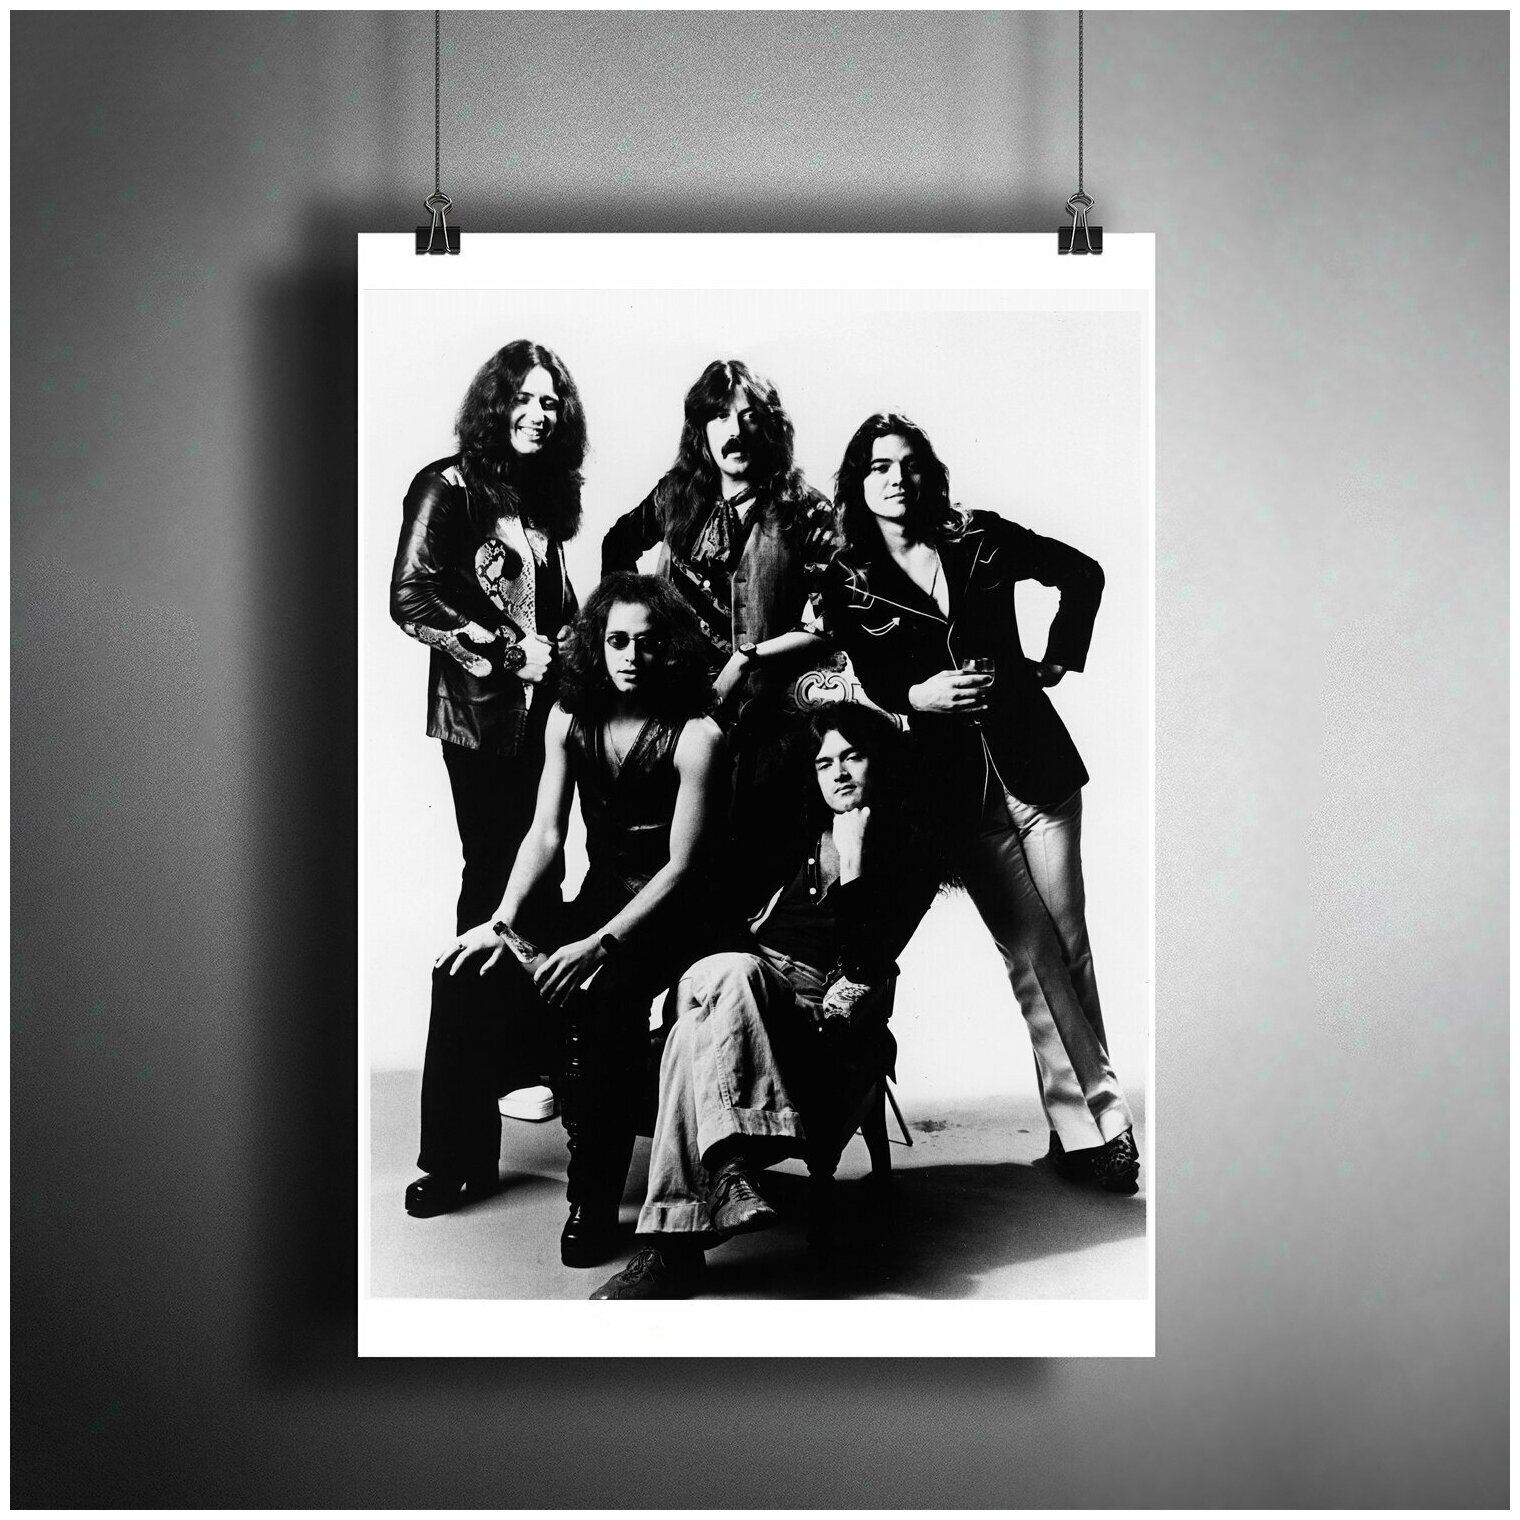 Постер плакат для интерьера "Музыка: Британская рок-группа Deep Purple" / Декор дома, офиса, комнаты, квартиры A3 (297 x 420 мм)